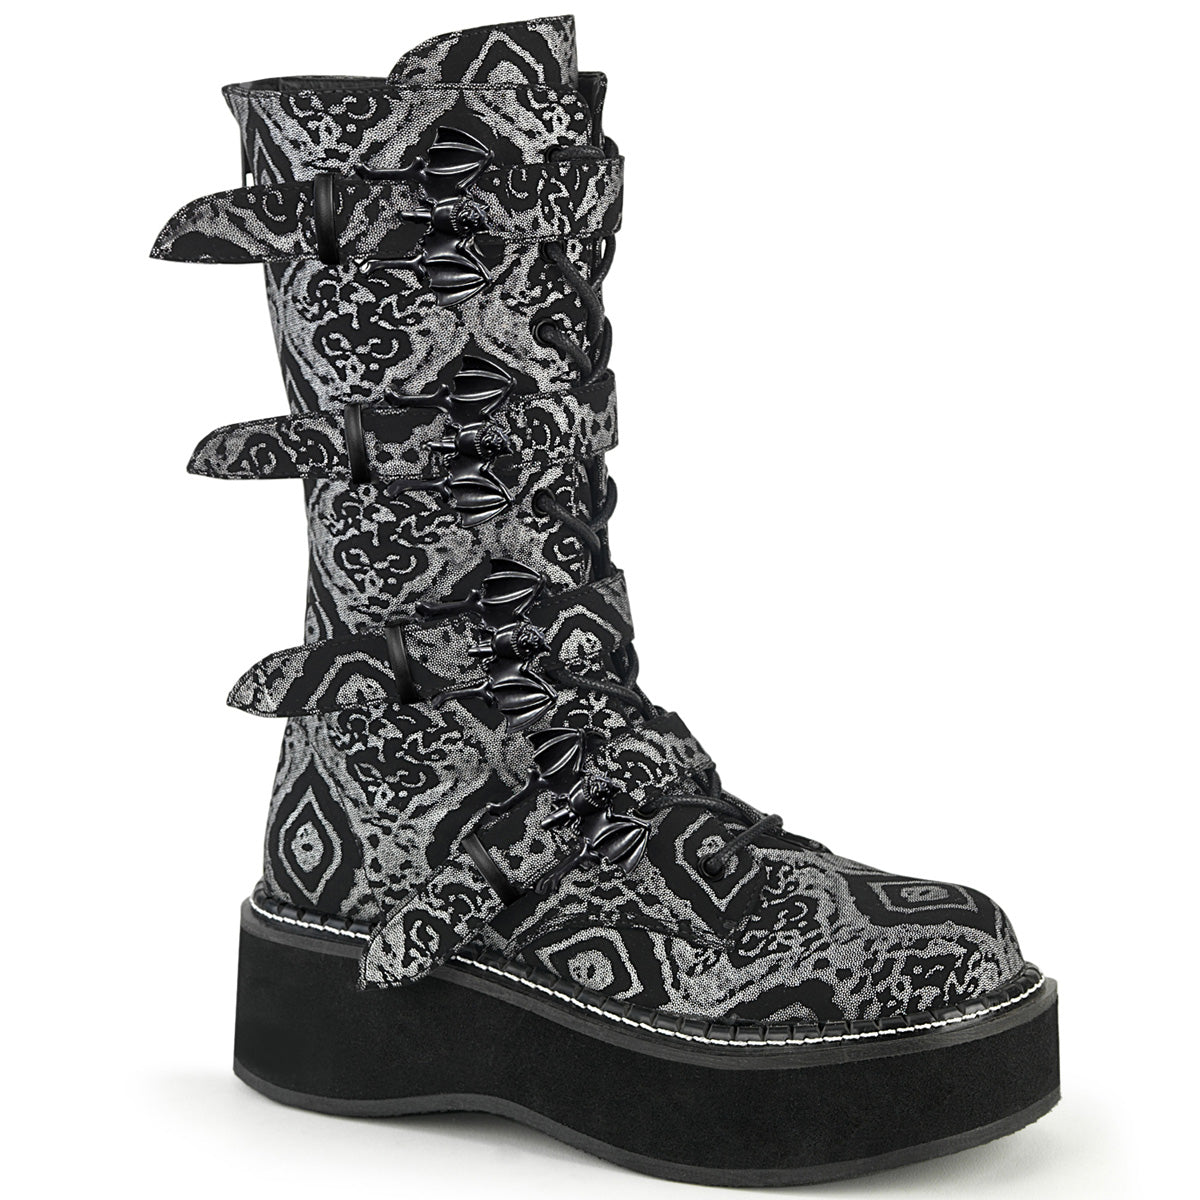 EMILY-322 Alternative Footwear Demonia Women's Mid-Calf & Knee High Boots Blk-Silver Faux Nubuck Leather